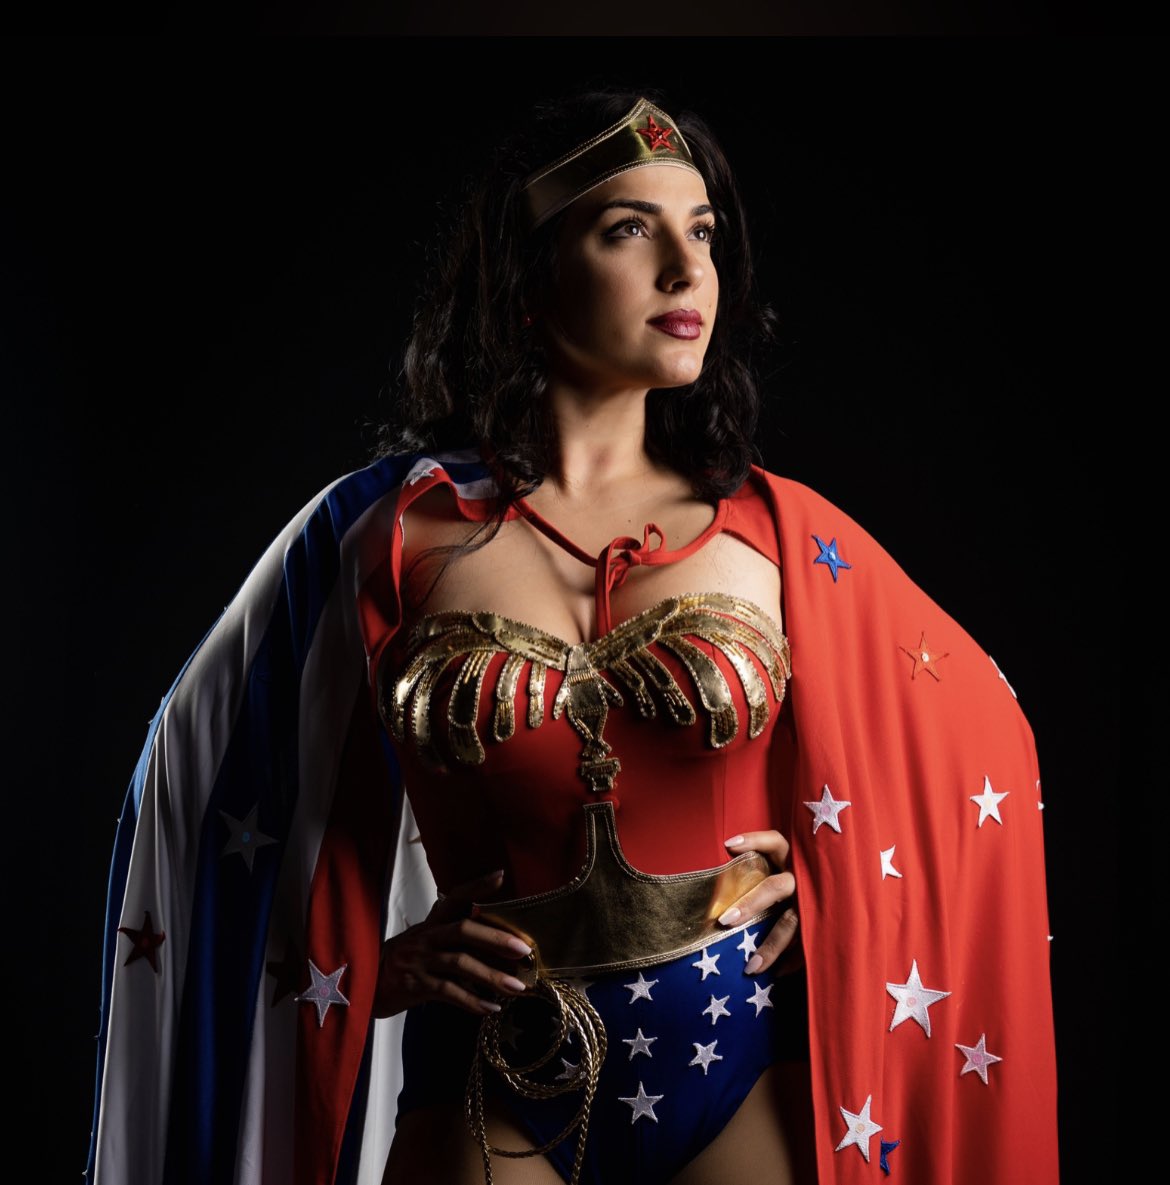 Happy Wonder Woman Day ❤️ Oct 21 Photo @jjenkinsphoto #wonderwoman